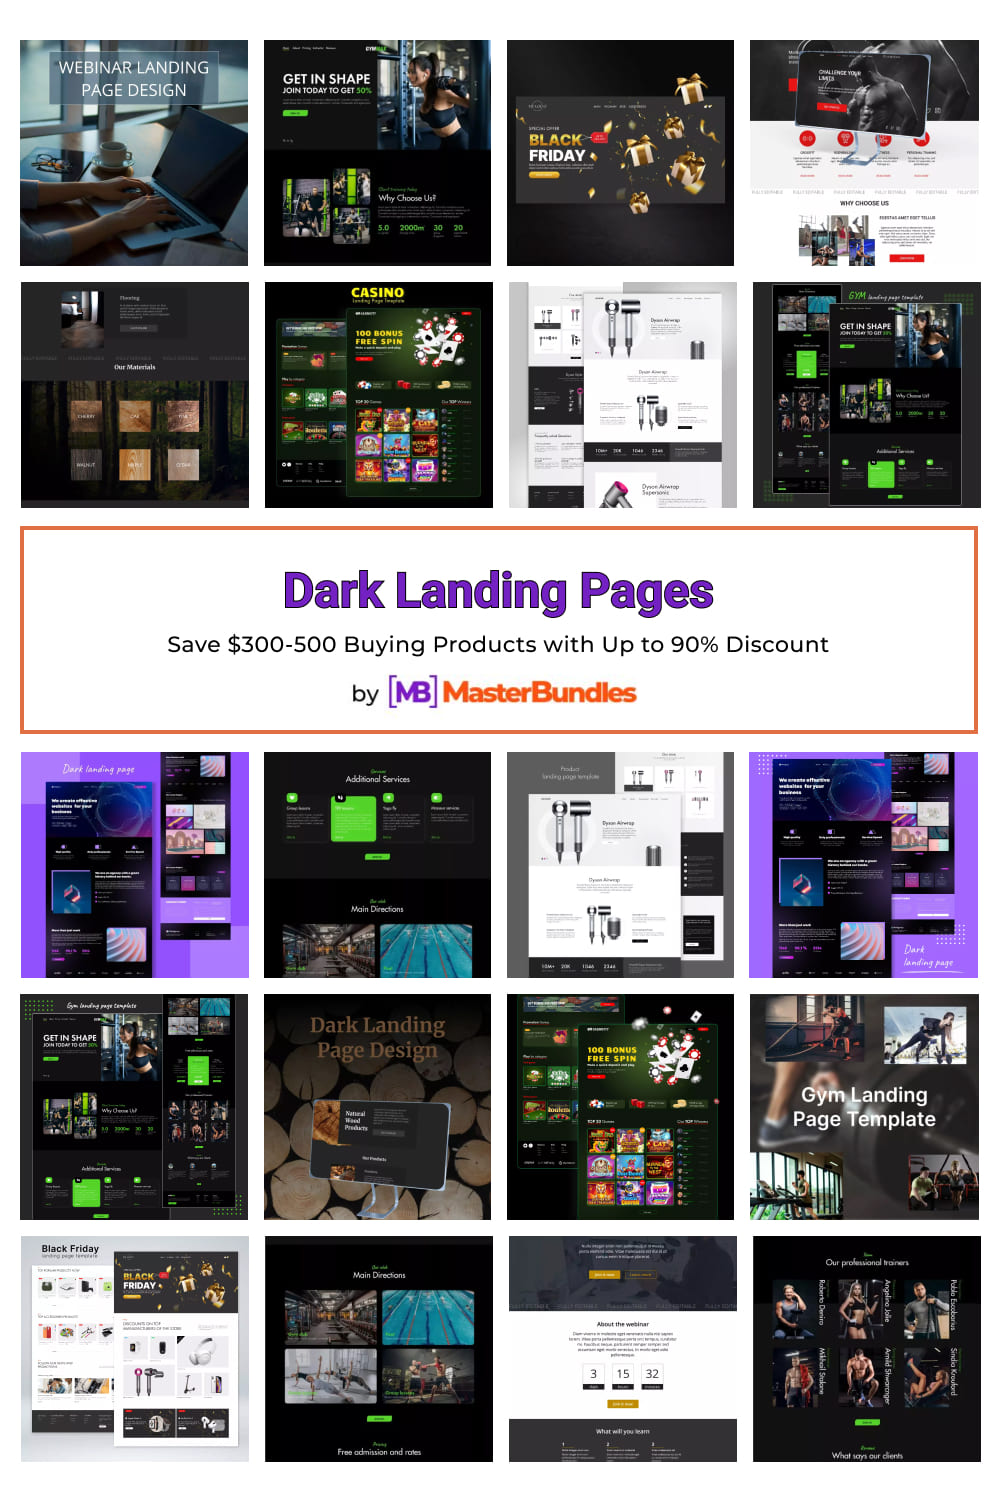 Dark Landing Pages for Pinterest.